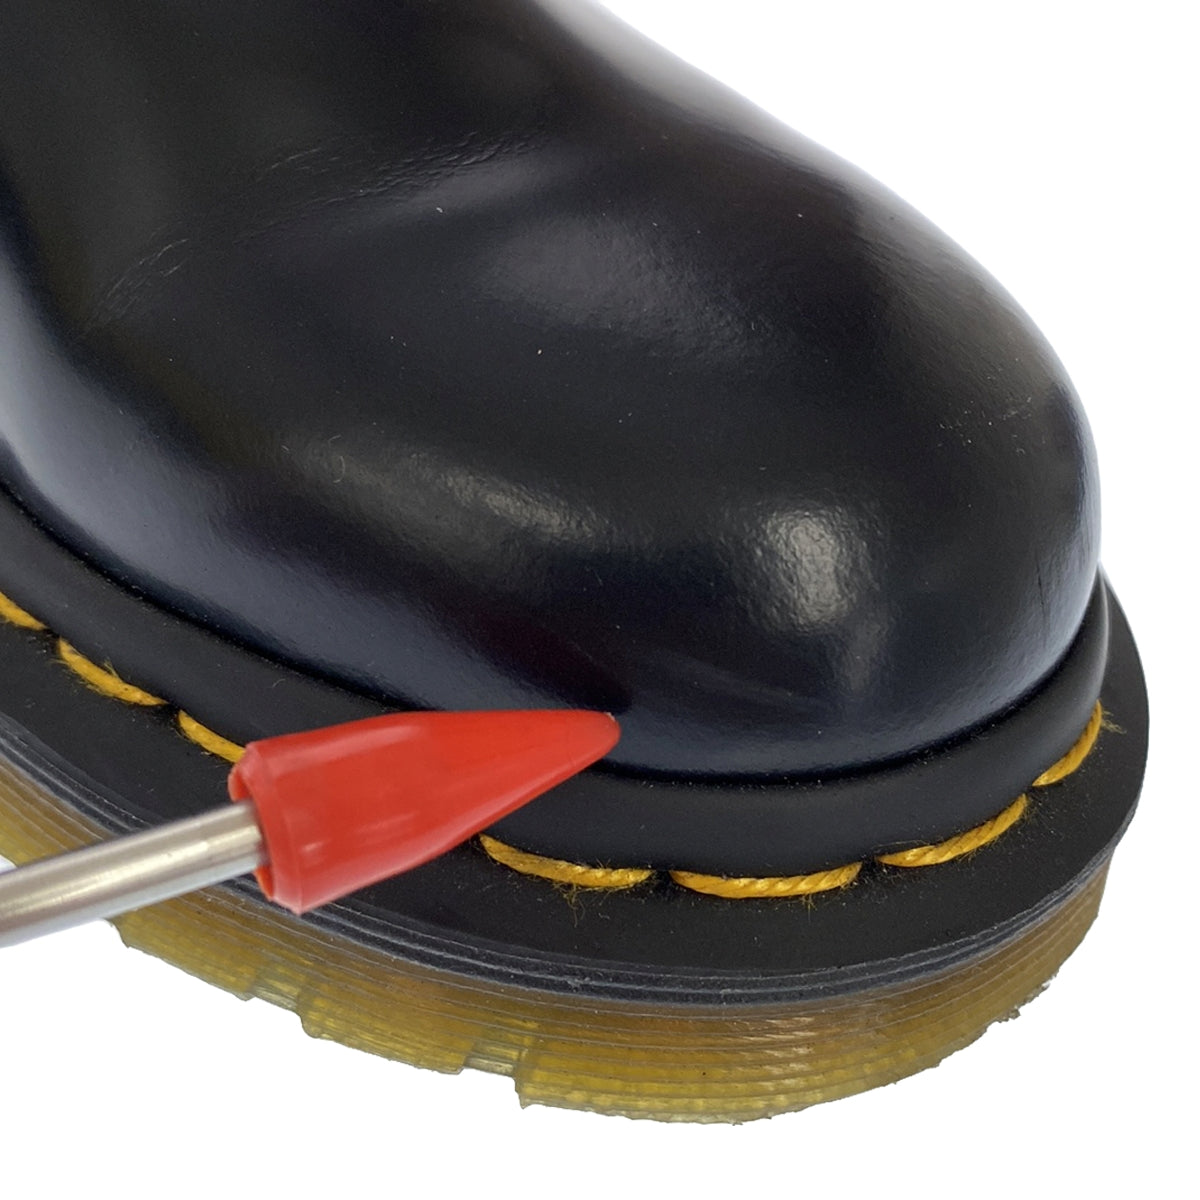 Dr.Martens / ドクターマーチン | POLLEY / ポリー Tストラップ レザーシューズ 革靴 | UK3 | レディース